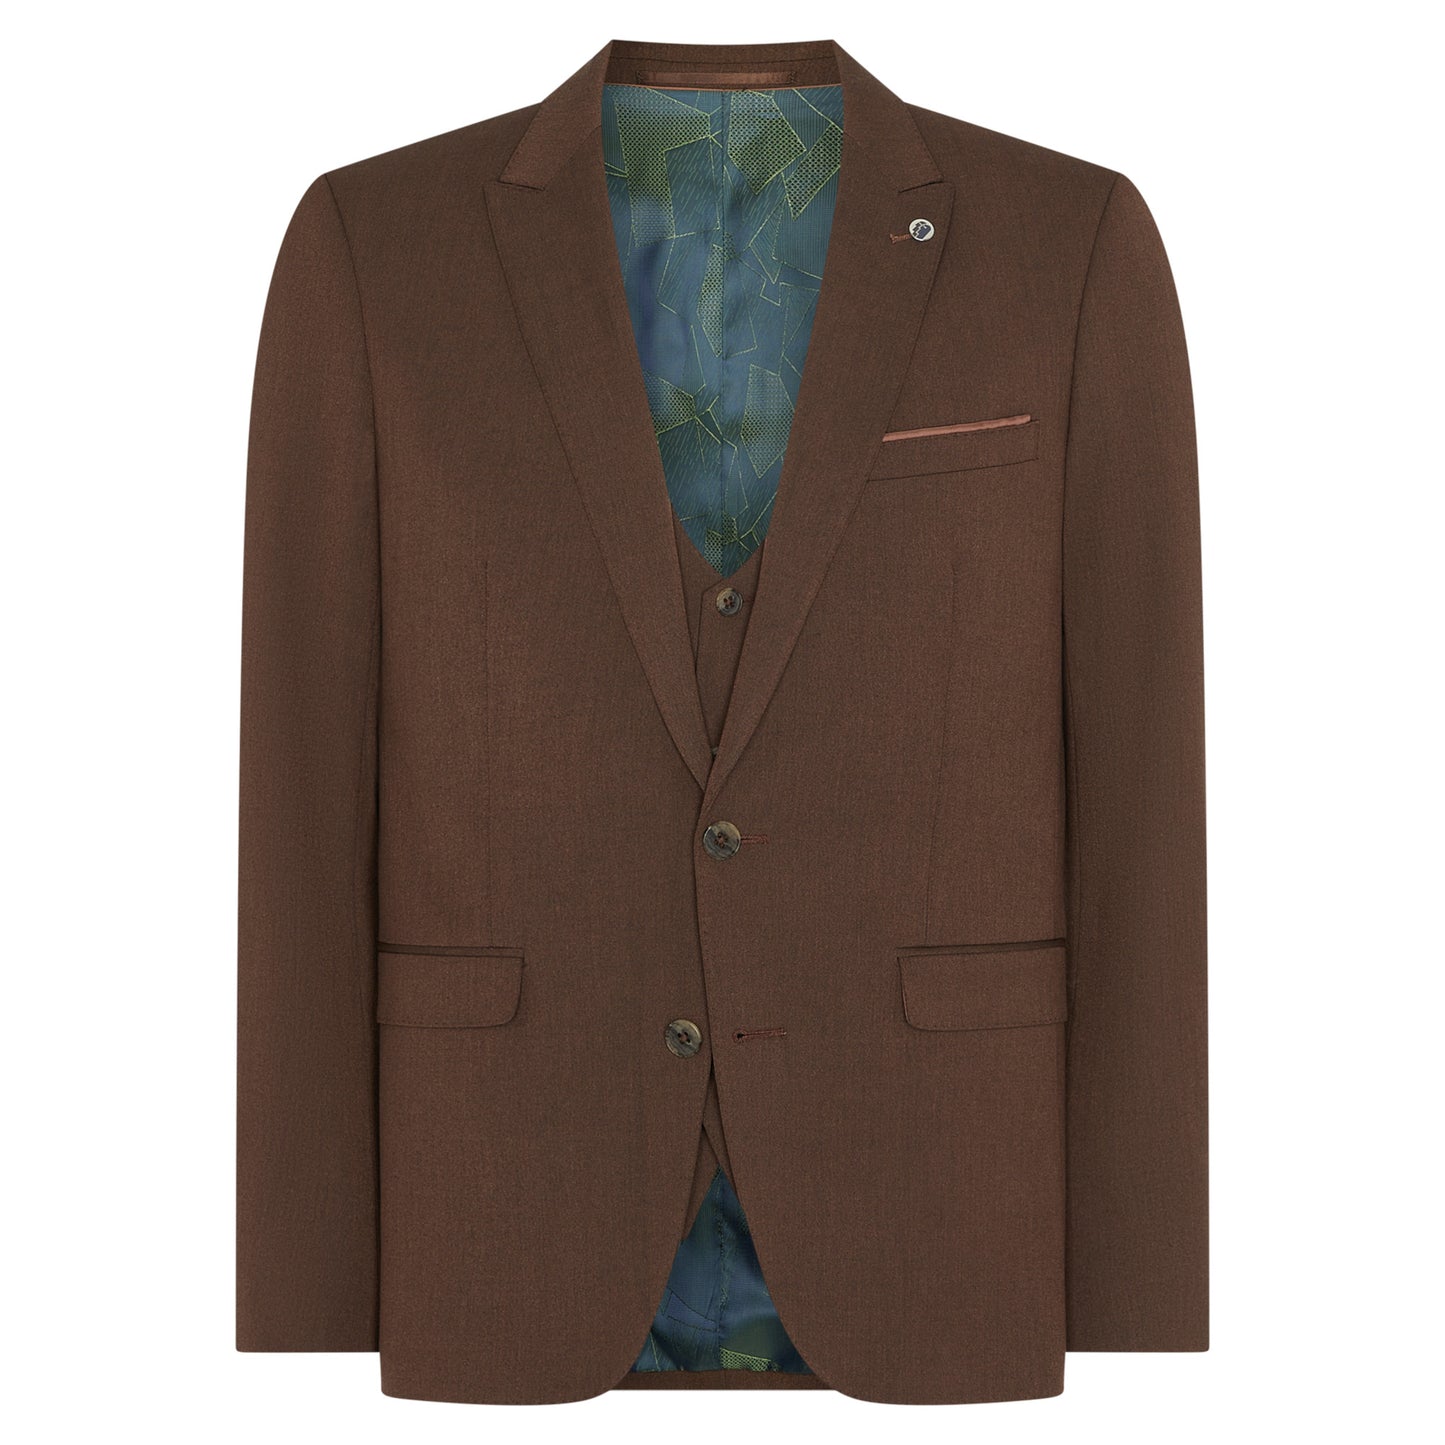 Remus Uomo 22179 46 Brown X-Slim Suit